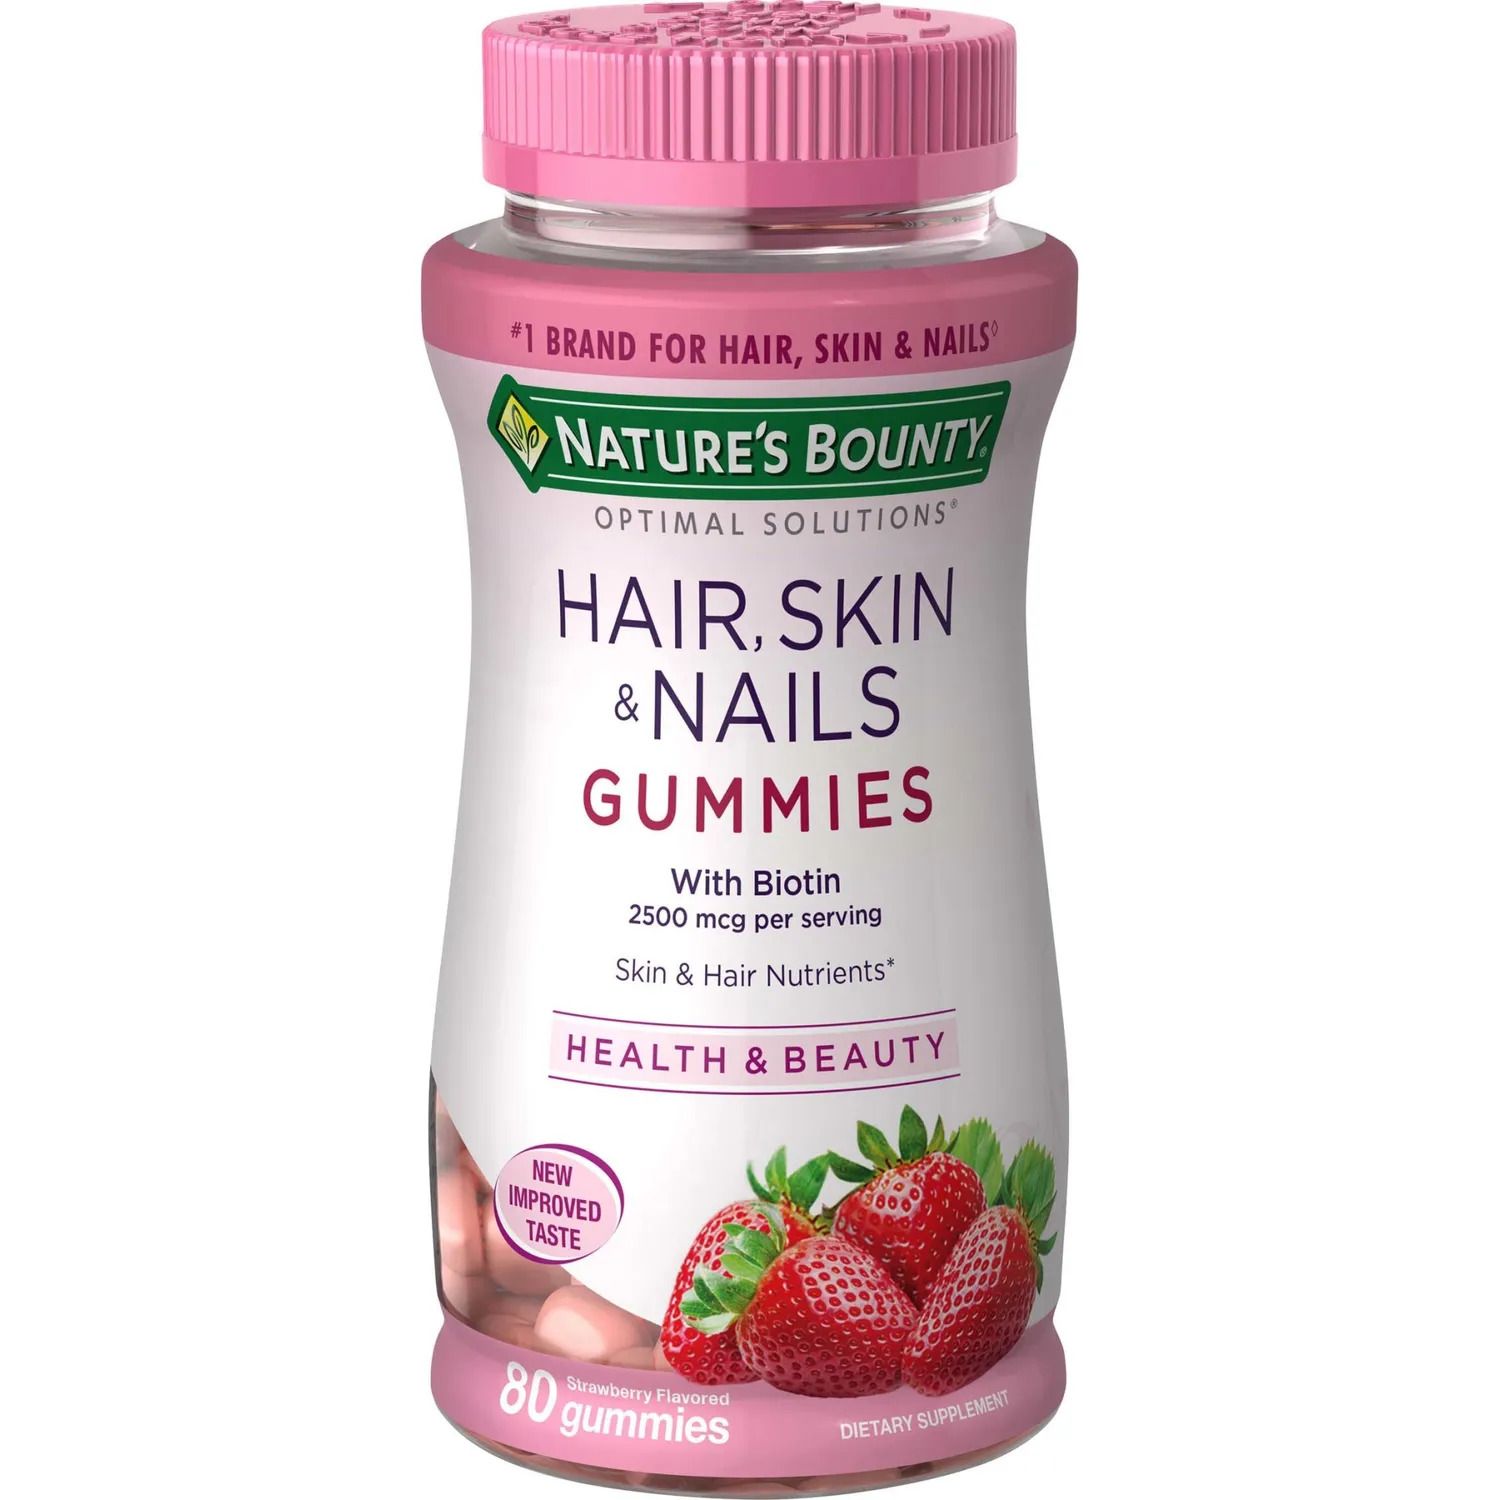 Nature's Bounty Hair, Skin & Nails Gummies with Biotin - 80 ct